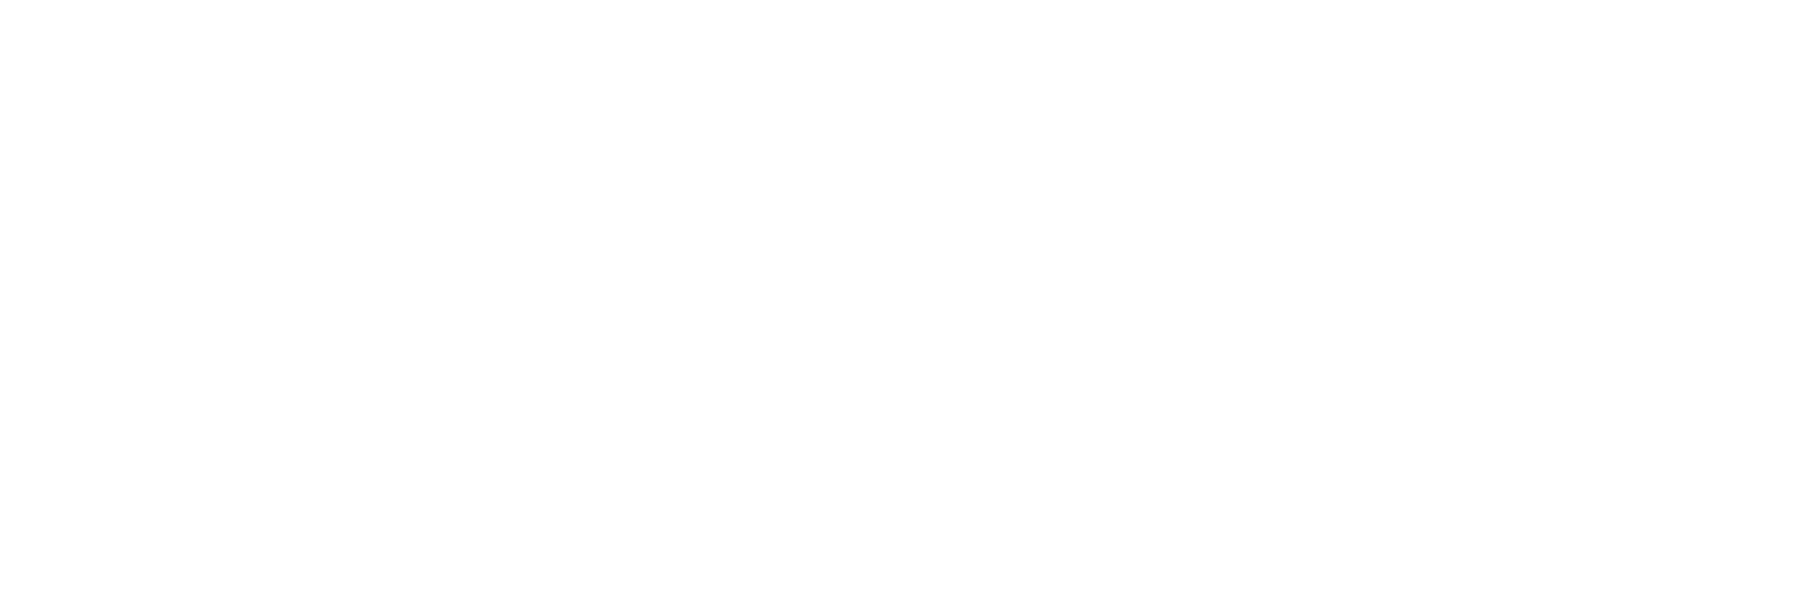 Hampshire Bifolds